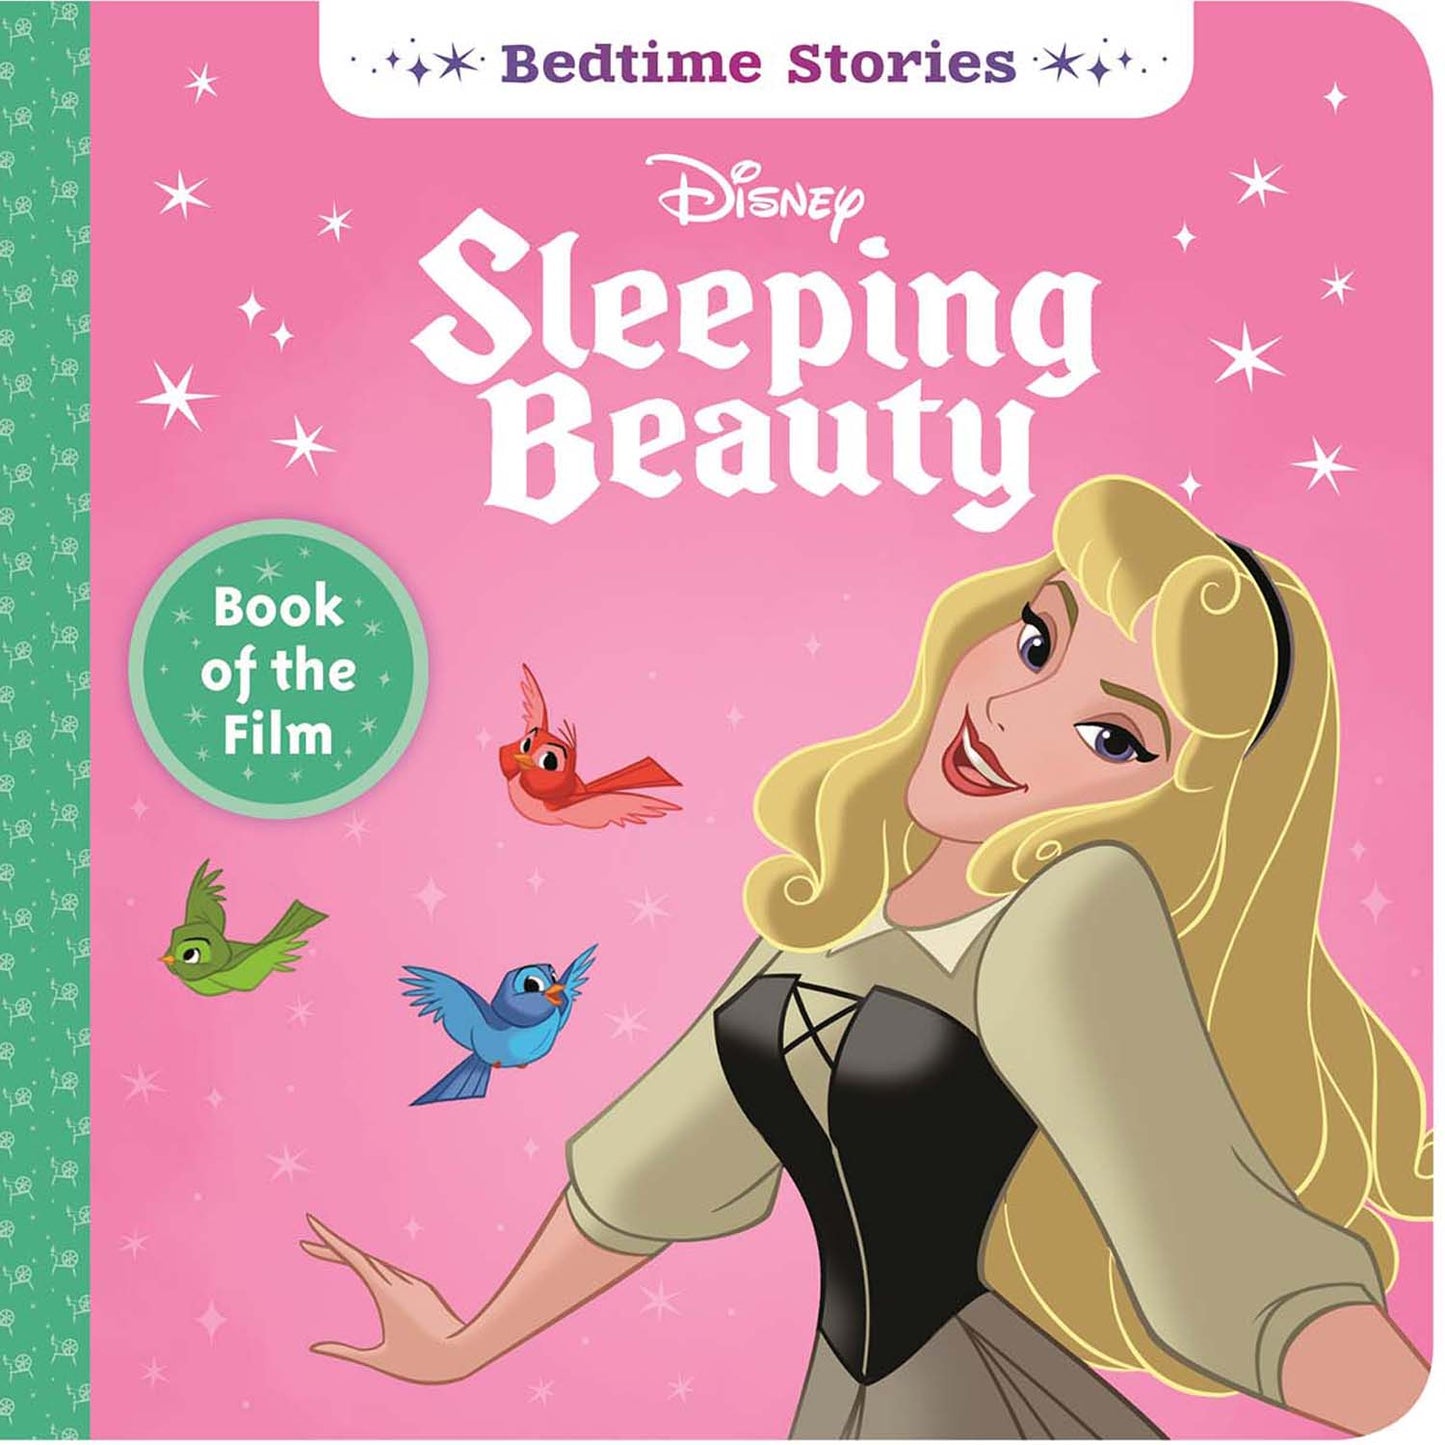 Disney Cinderella Bedtime Stories Book of the Film Walt Disney